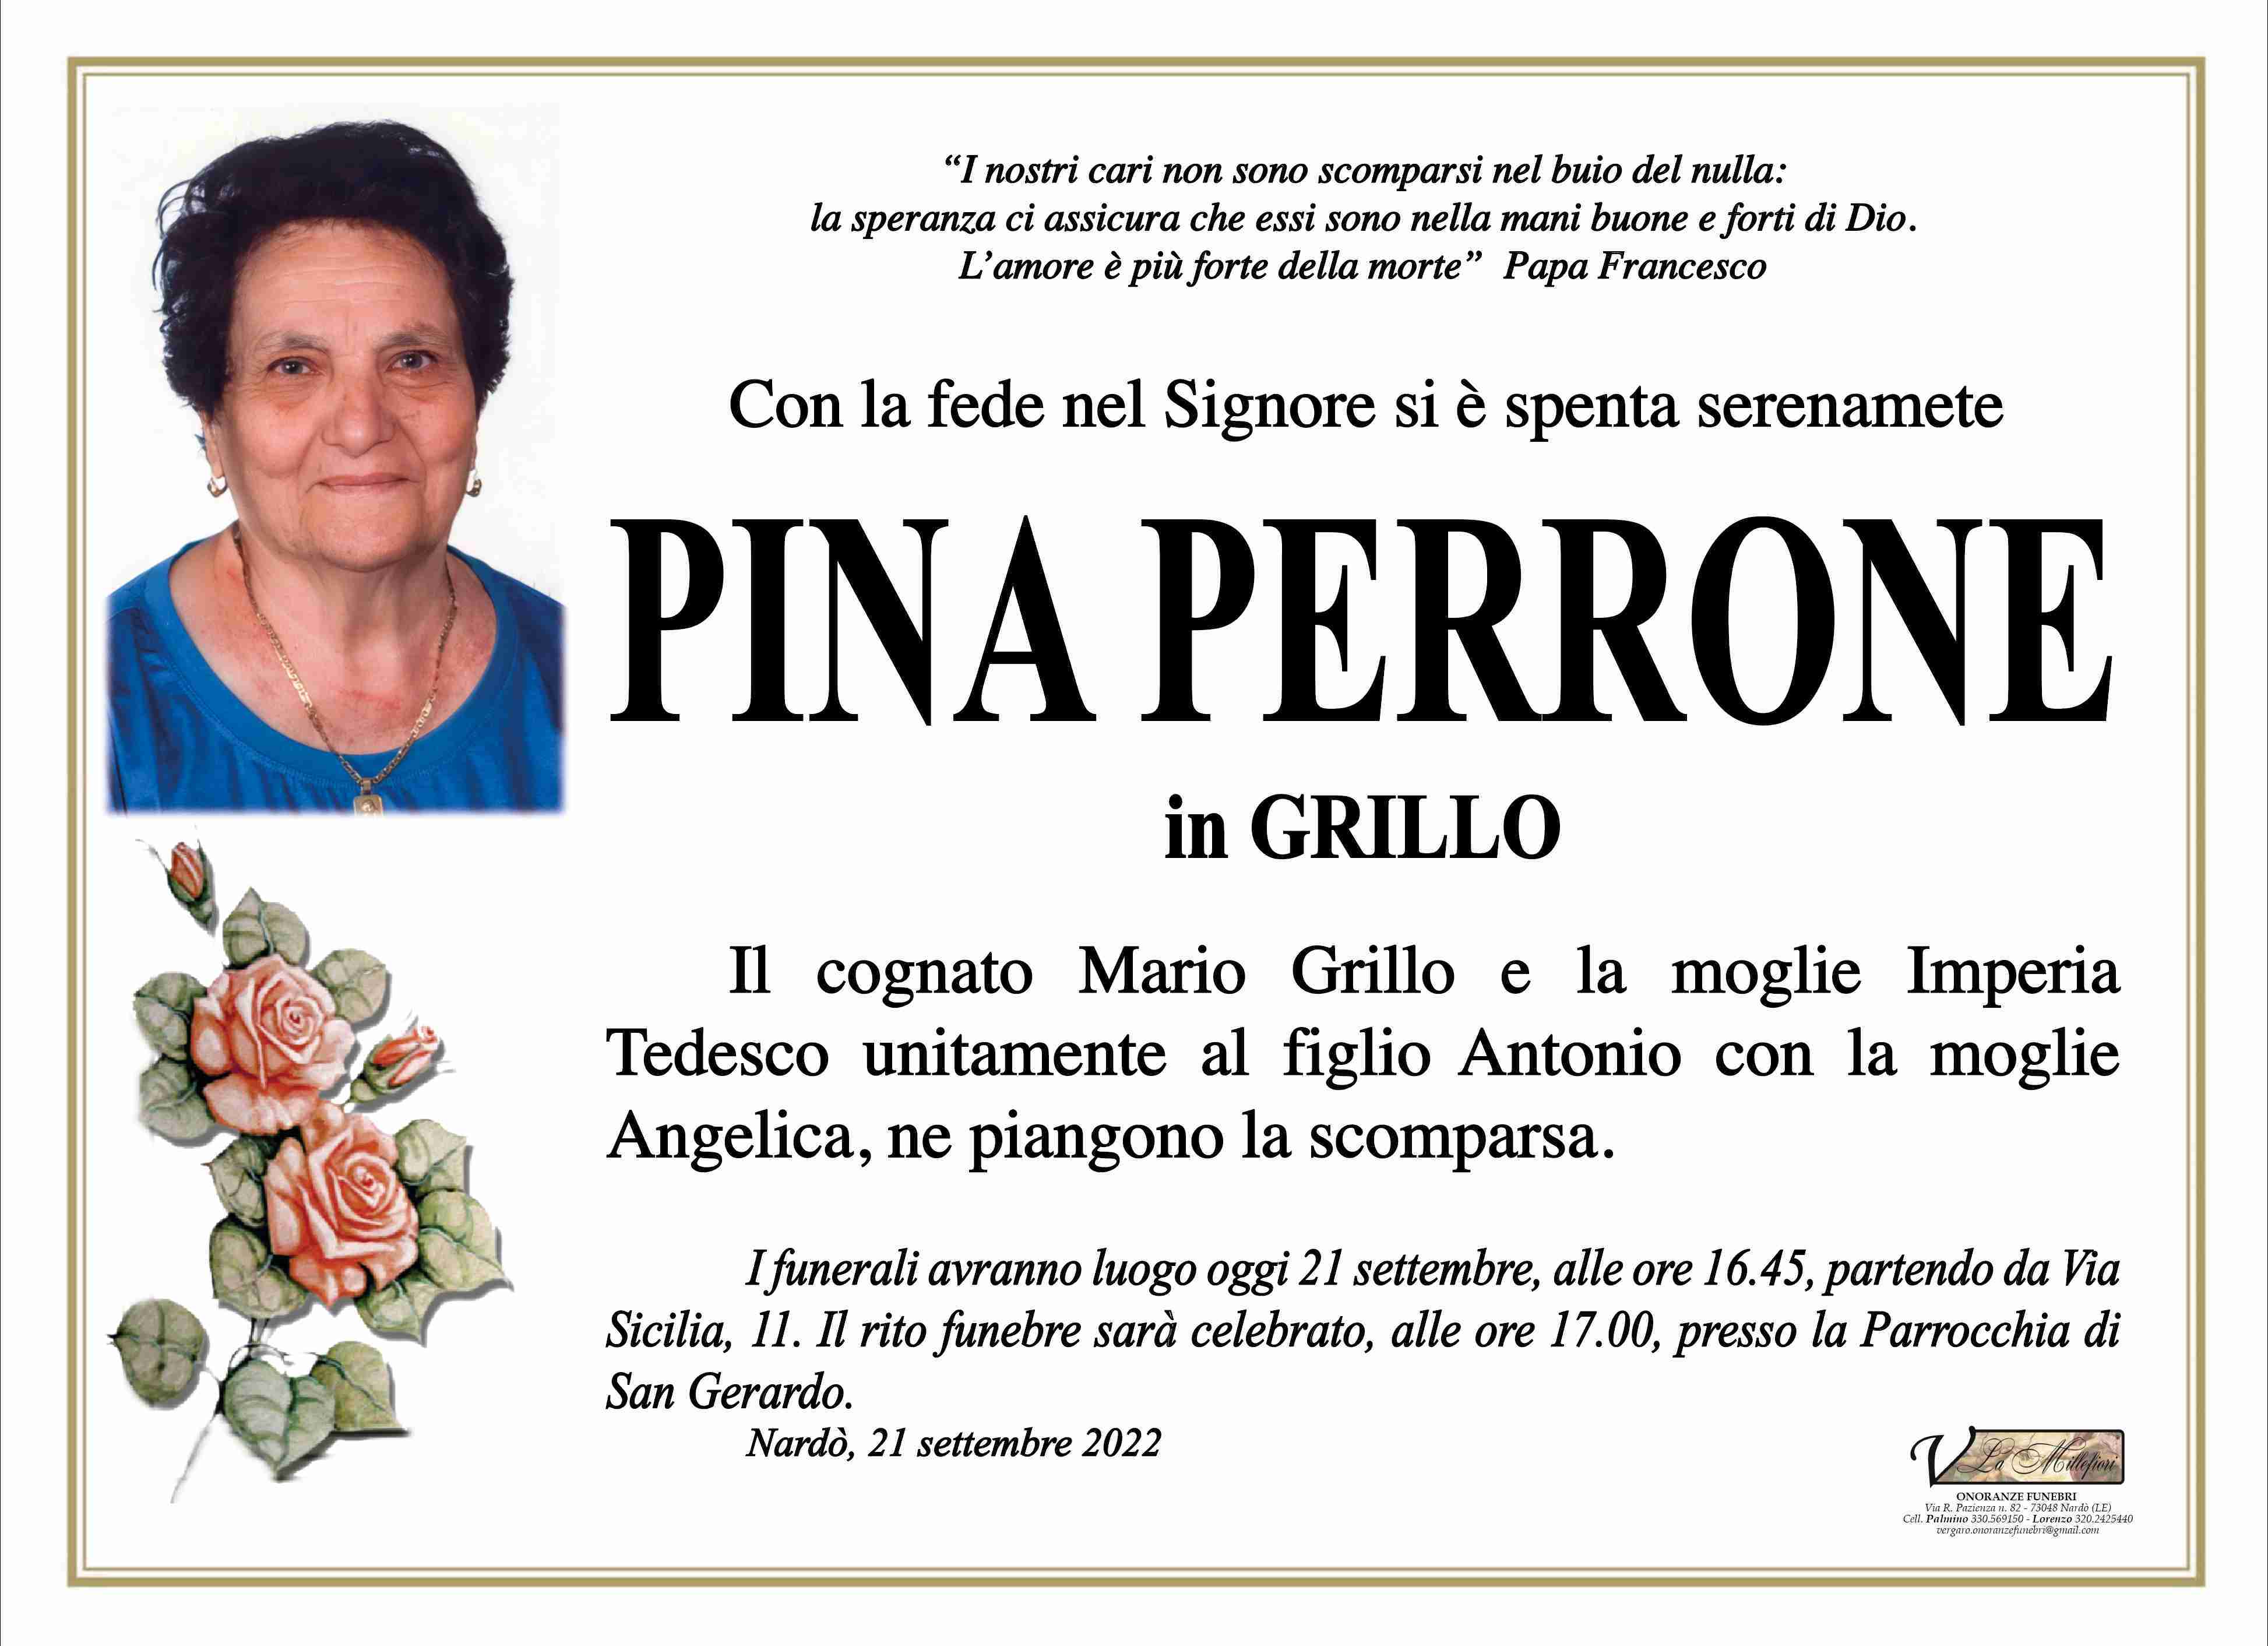 Giuseppa Perrone